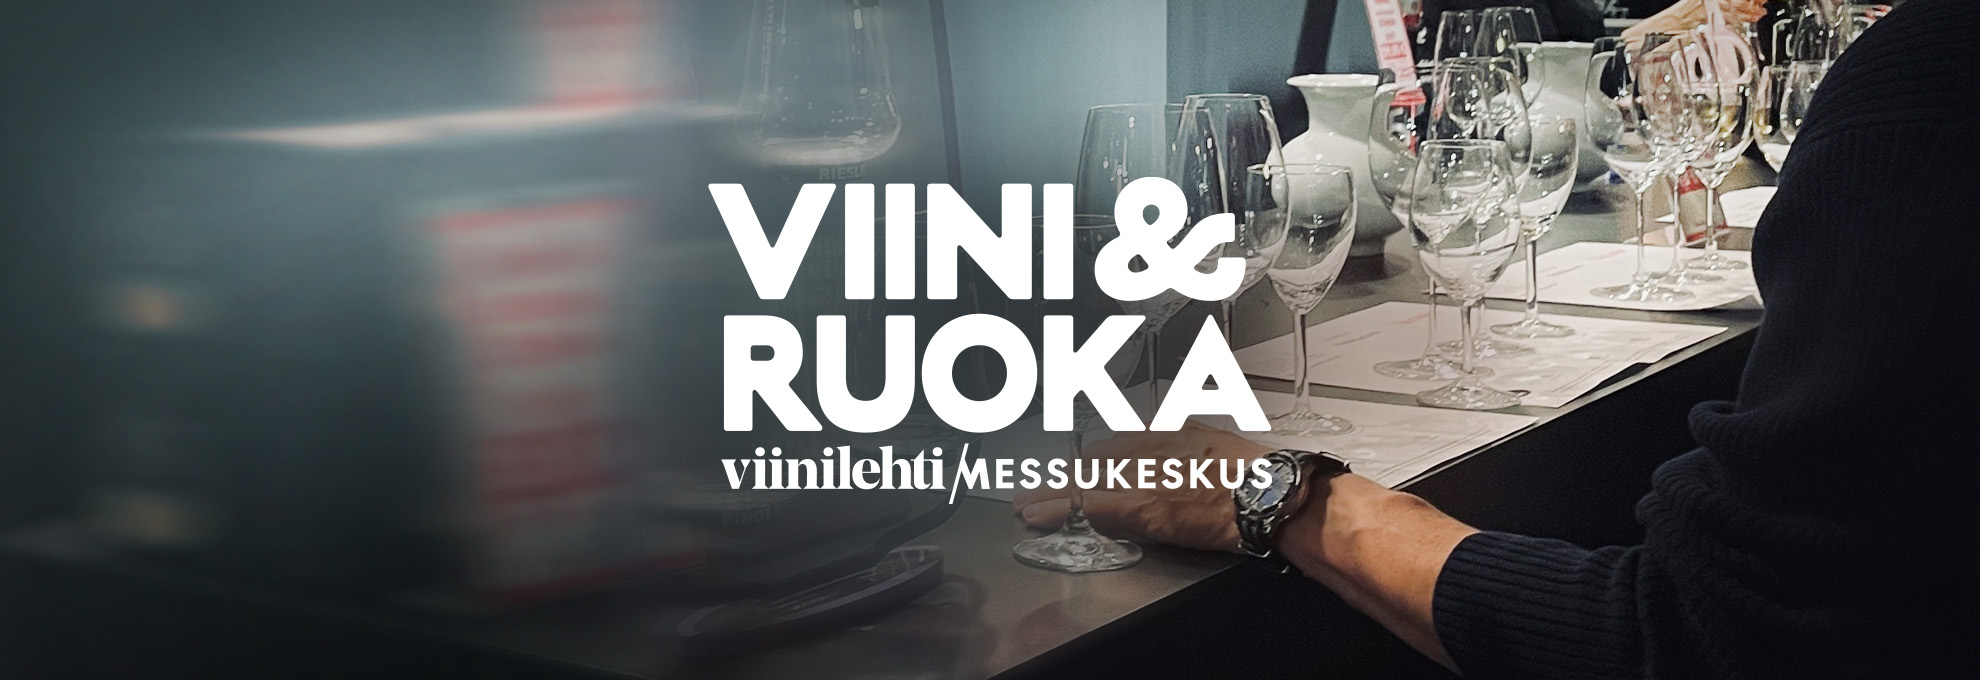 Viini & Ruoka viinintasting